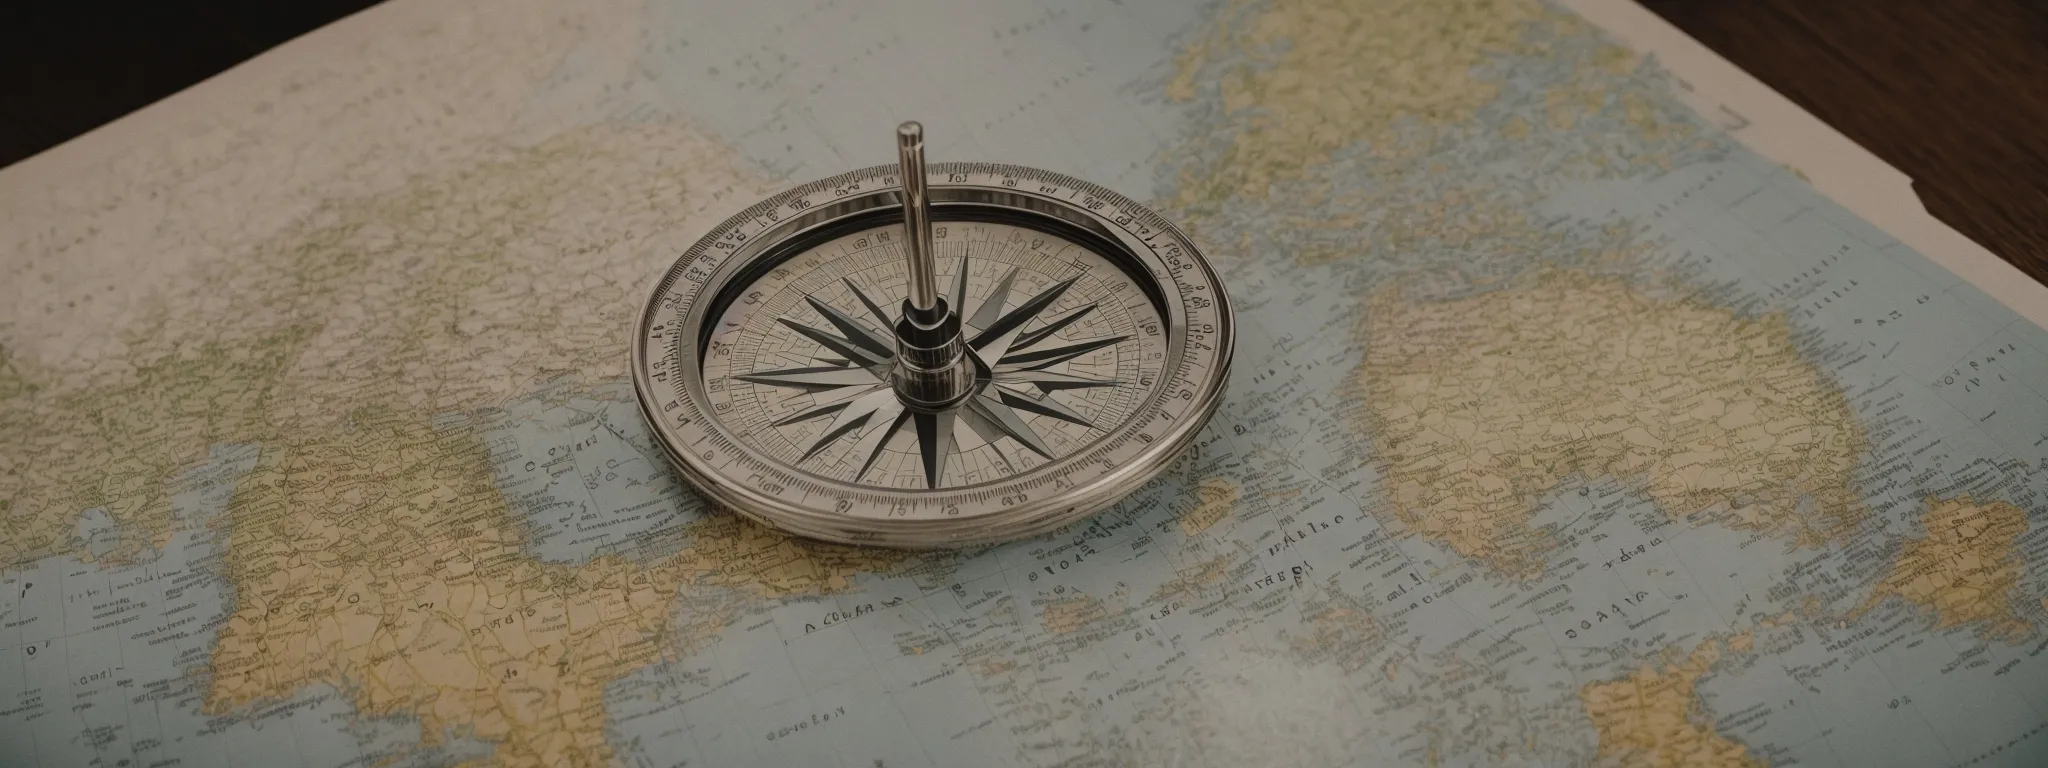 a compass on a map symbolizing strategic navigation towards seo goals.